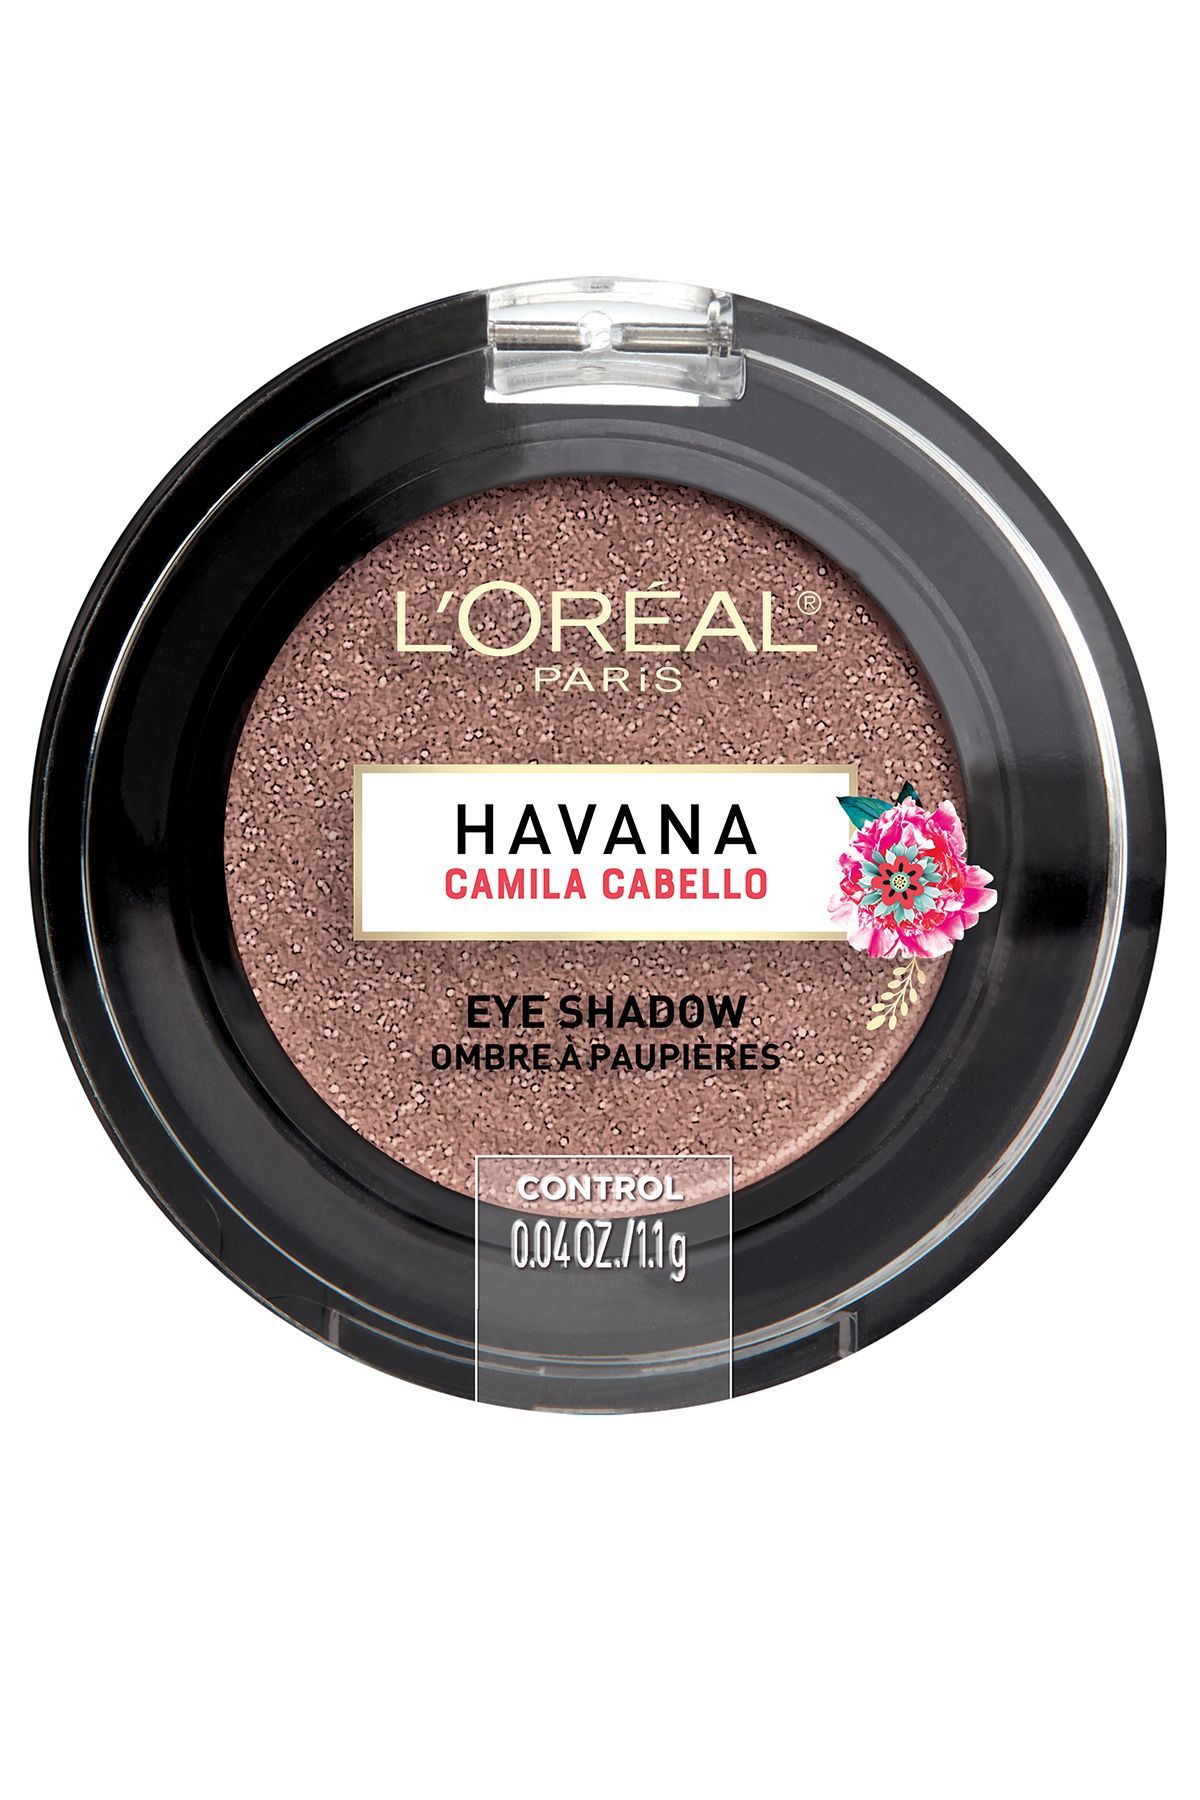 Havana x Camila Cabello Eyeshadow [Control (matte brown)]